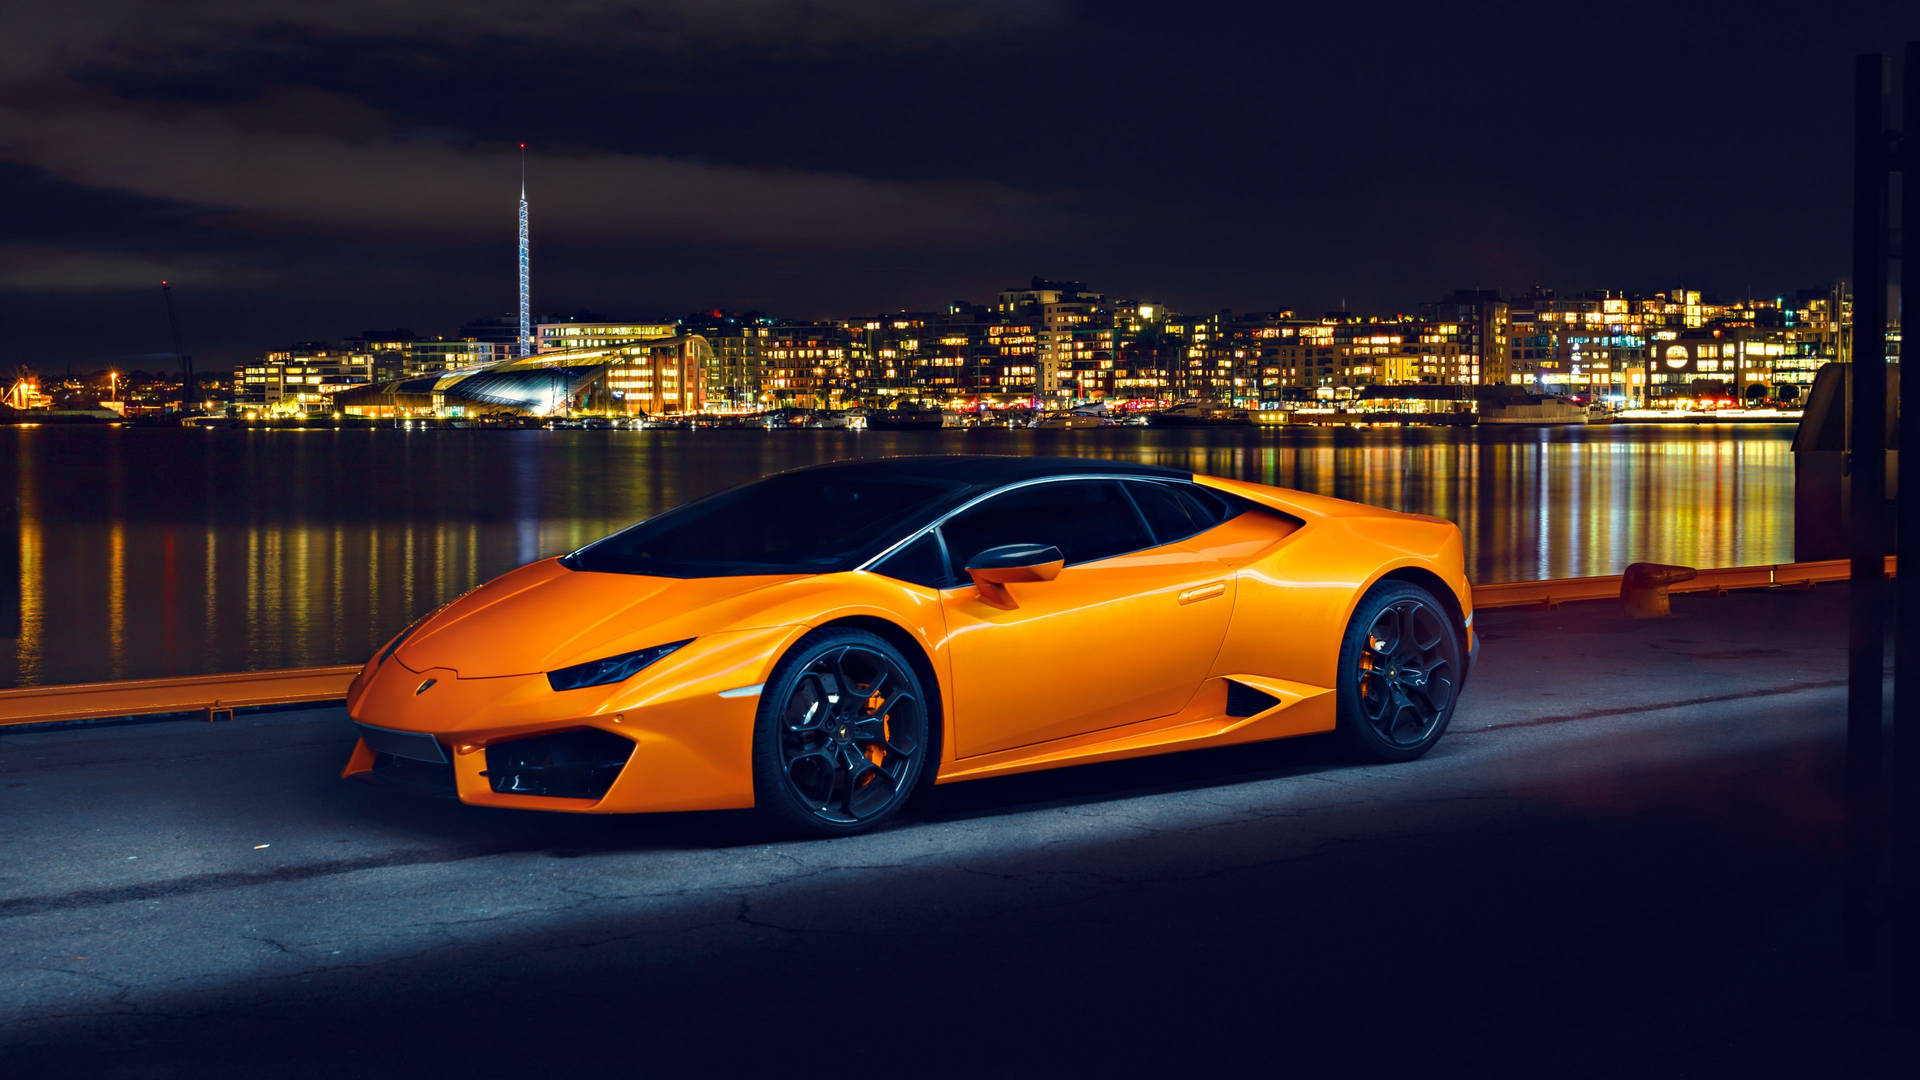 Cool Cars: Orange Lamborghini Car Wallpaper